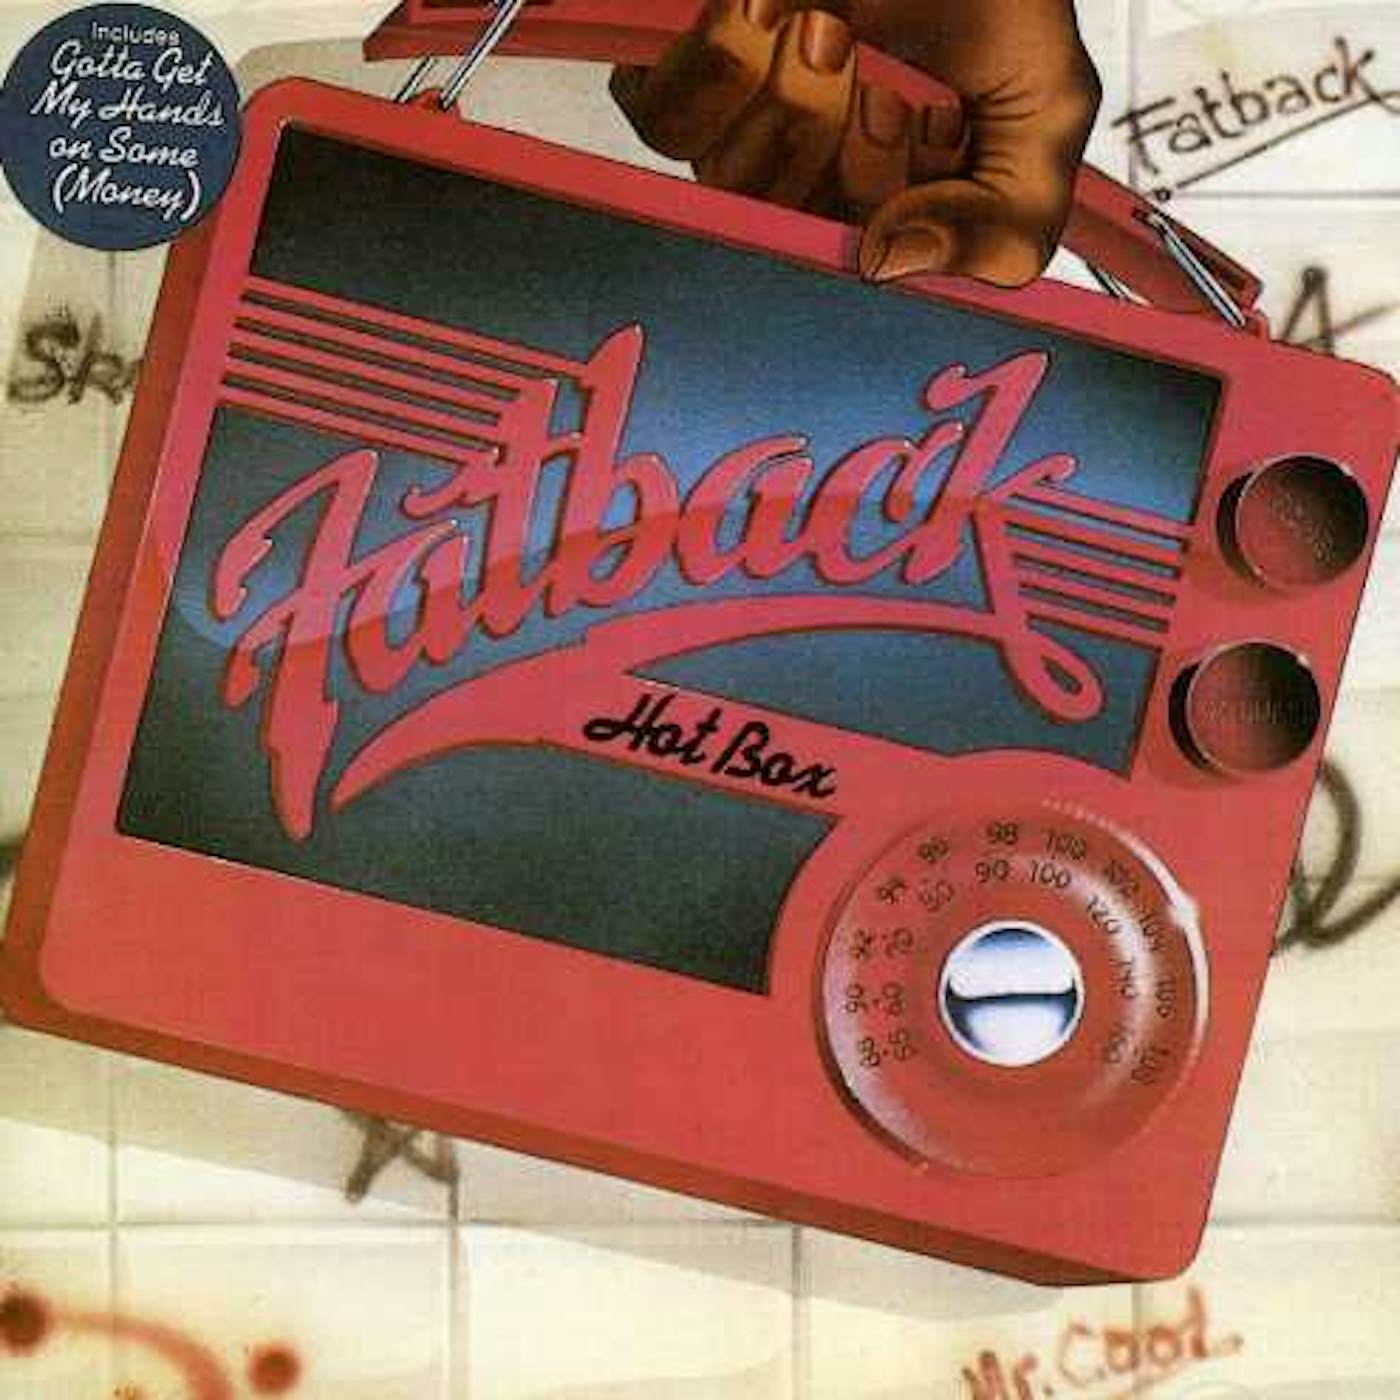 Fatback Band HOT BOX CD